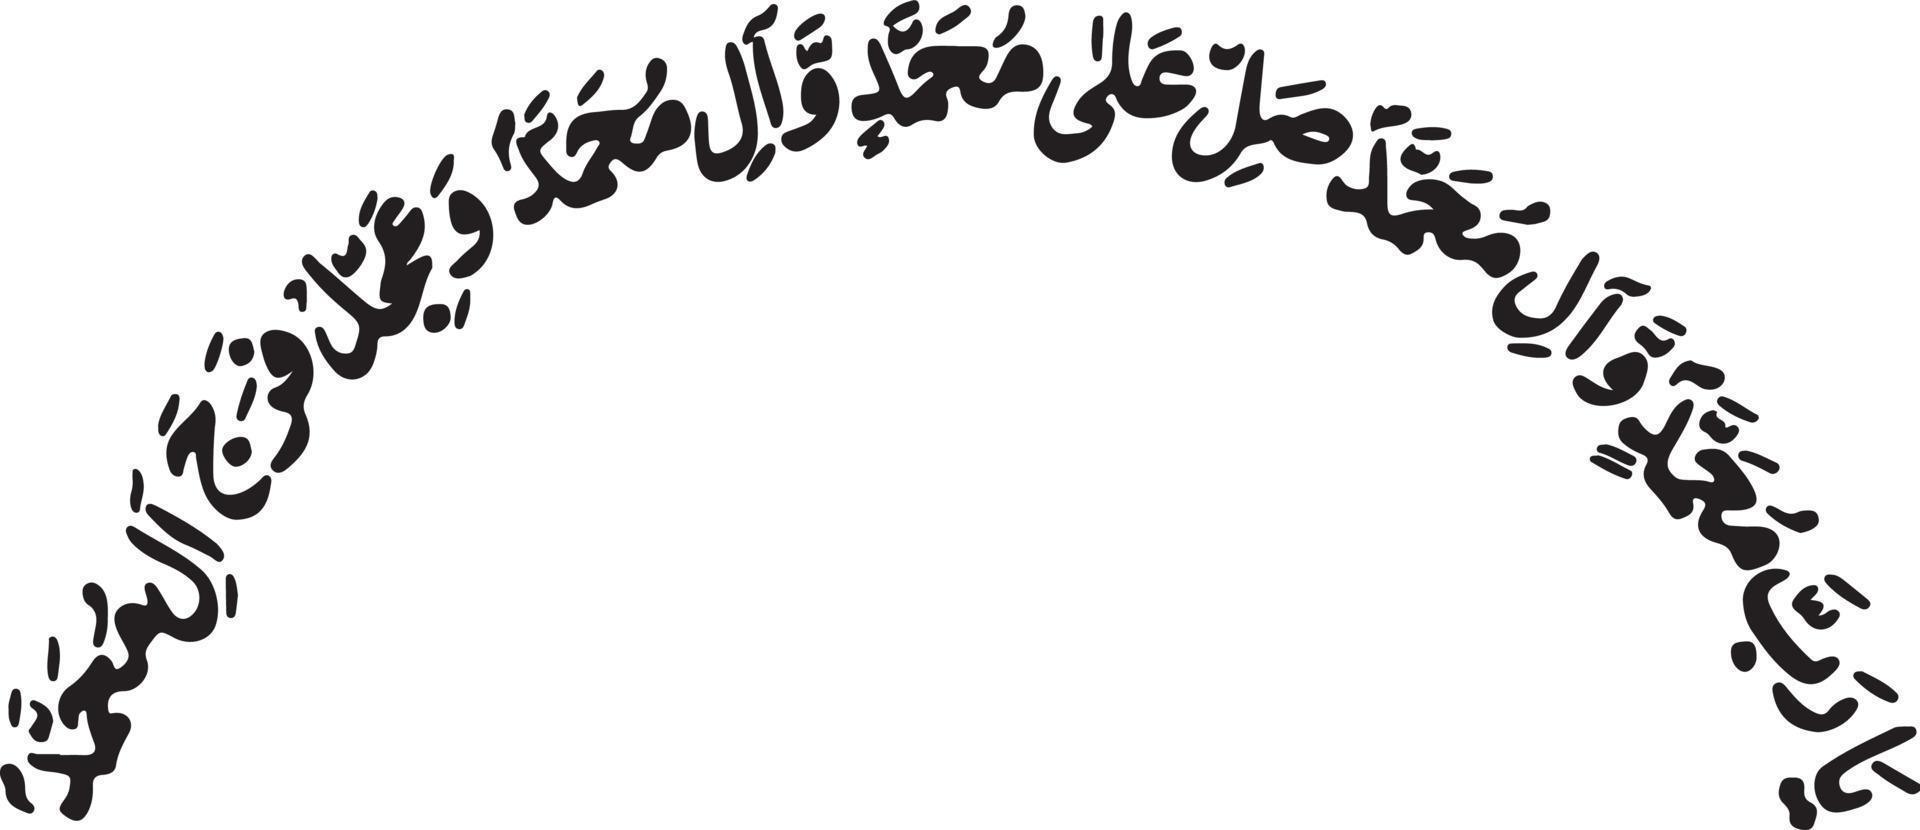 ya raba muhammad vetor livre de caligrafia urdu islâmica